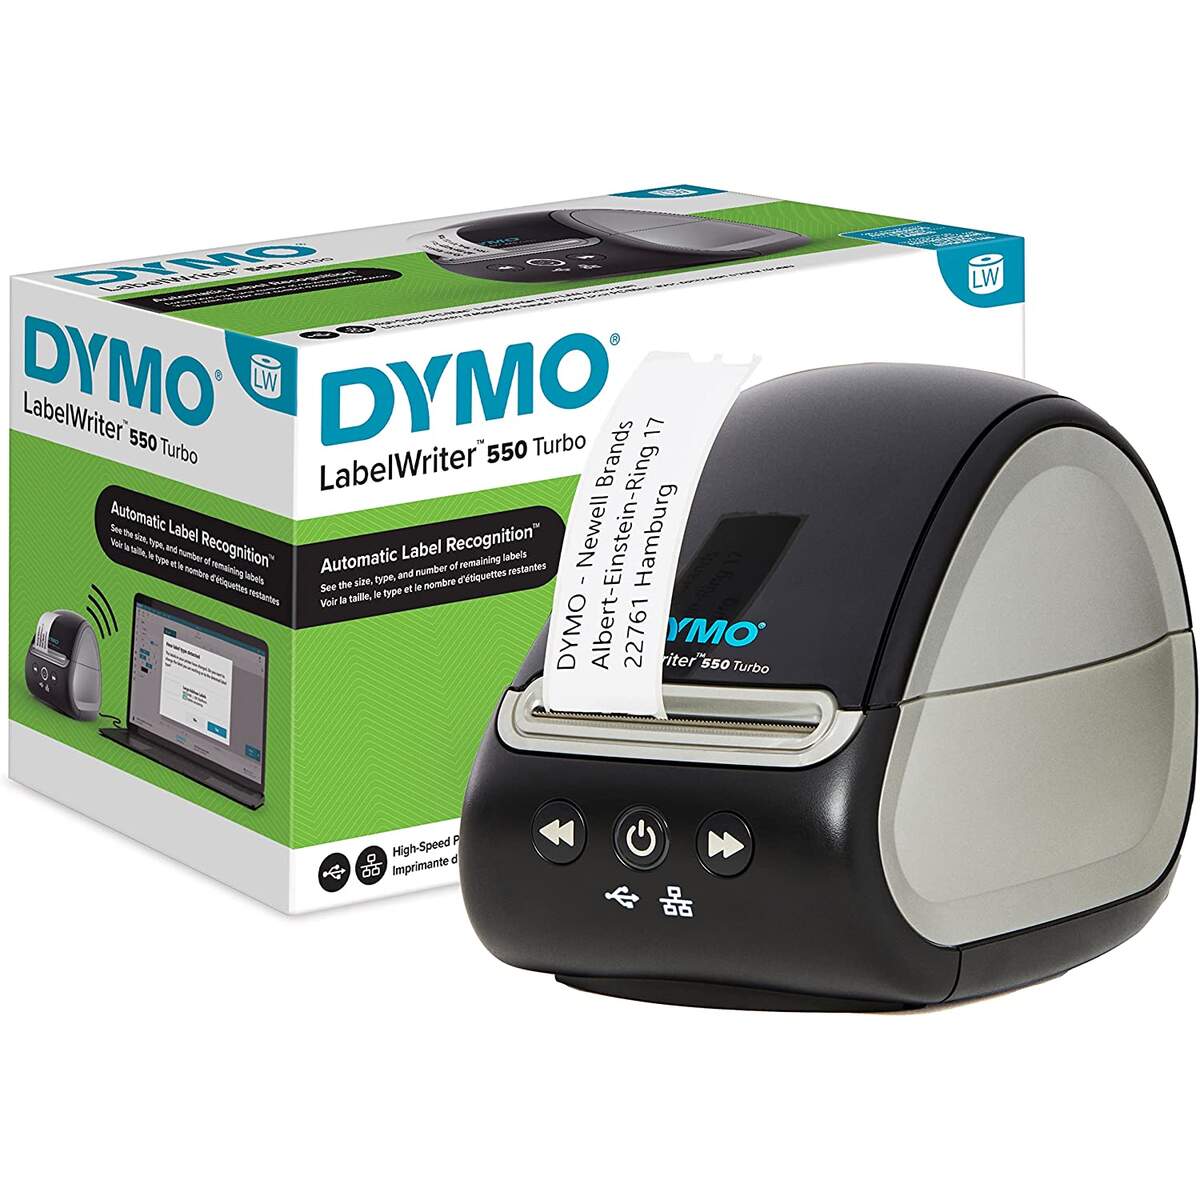 DYMO LabelWriter 550 Turbo image